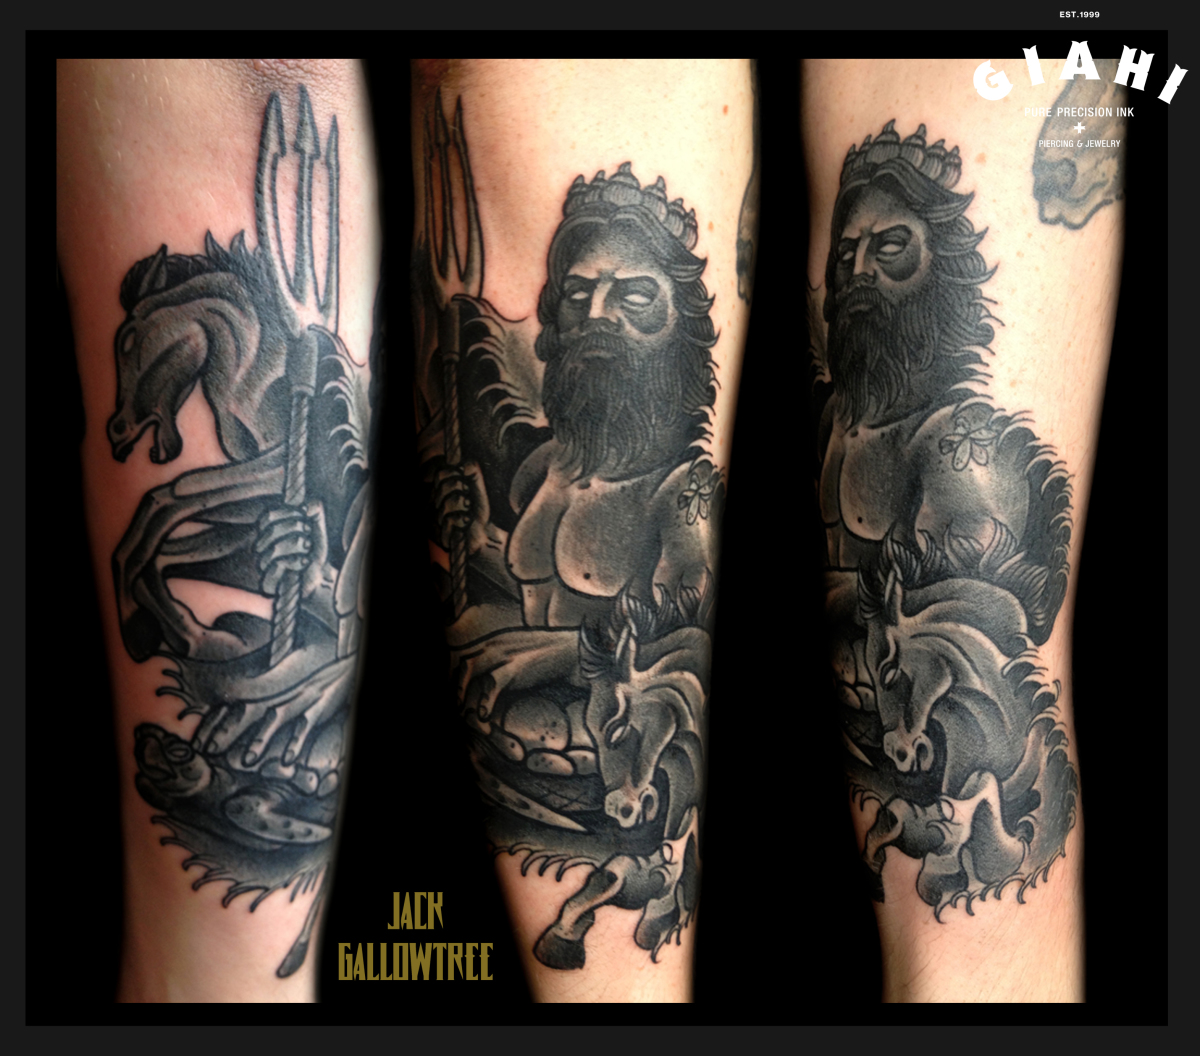 Blackwork Neptune tattoo by Jack Gallowtree